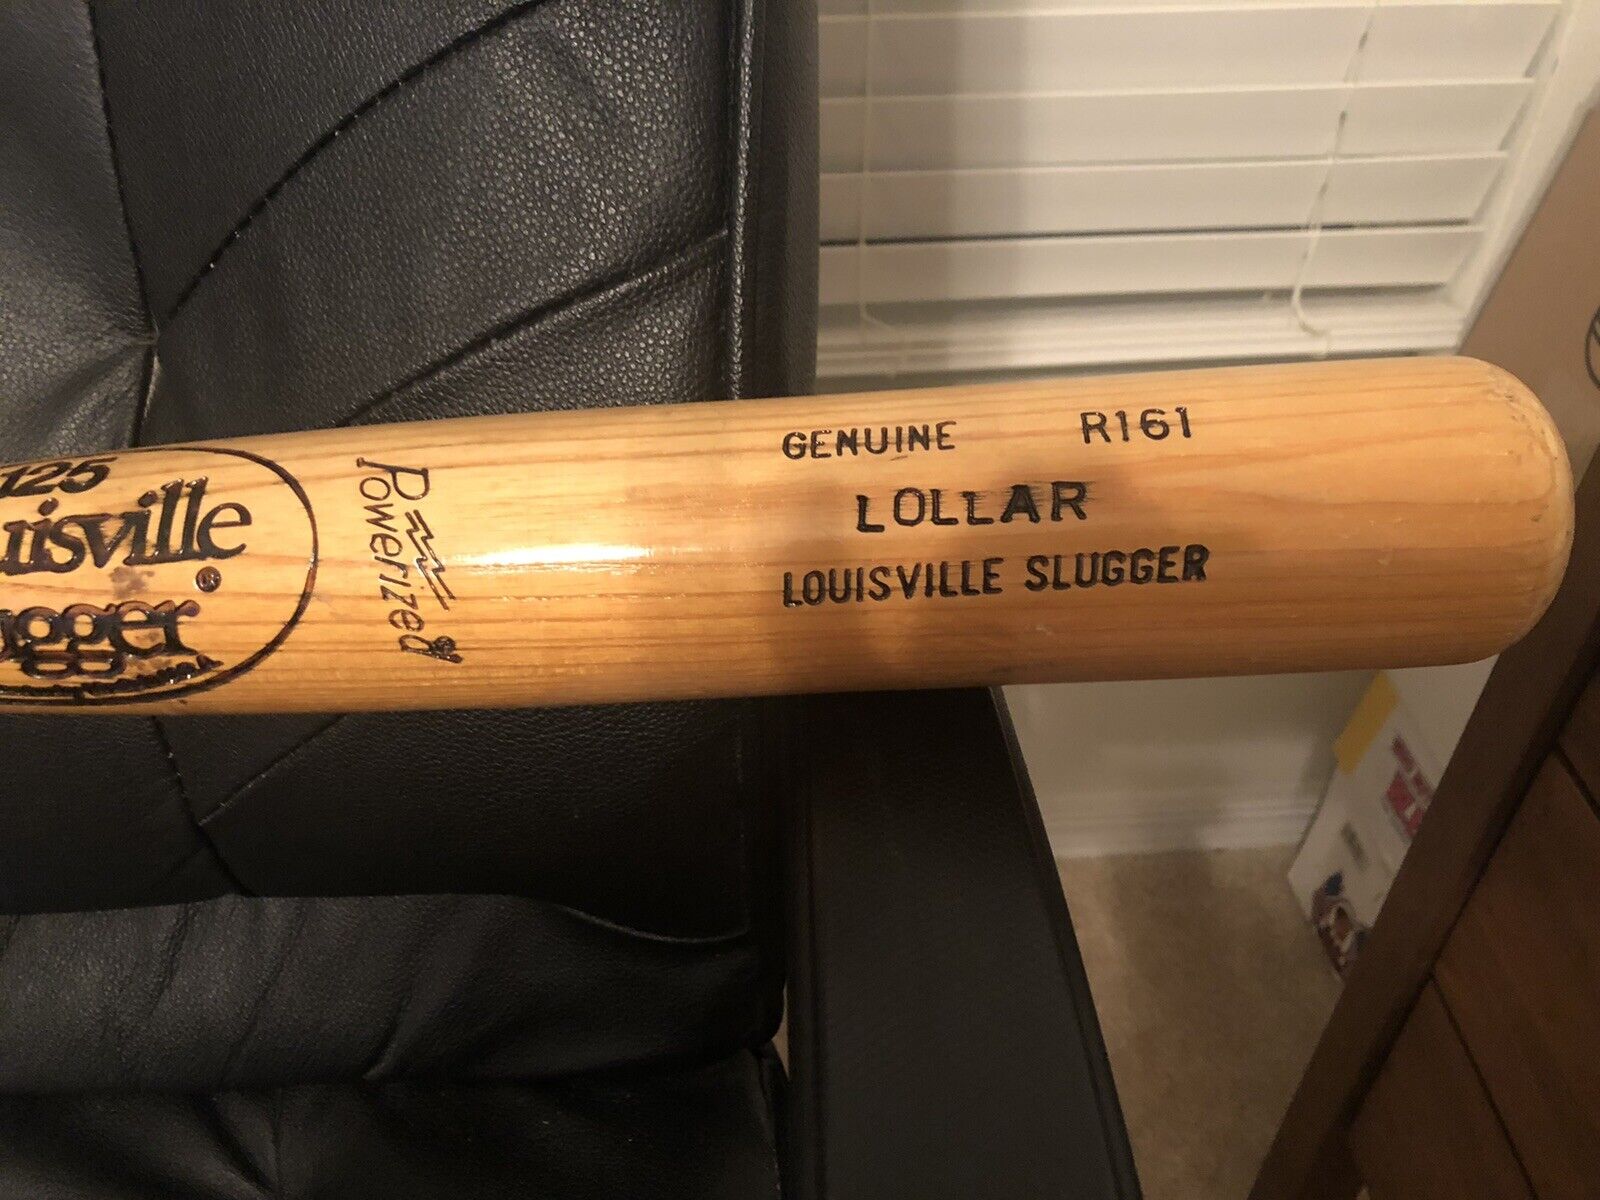 Sherm Lollar Loisville Slugger Baseball Bat Genuine R161 no signature